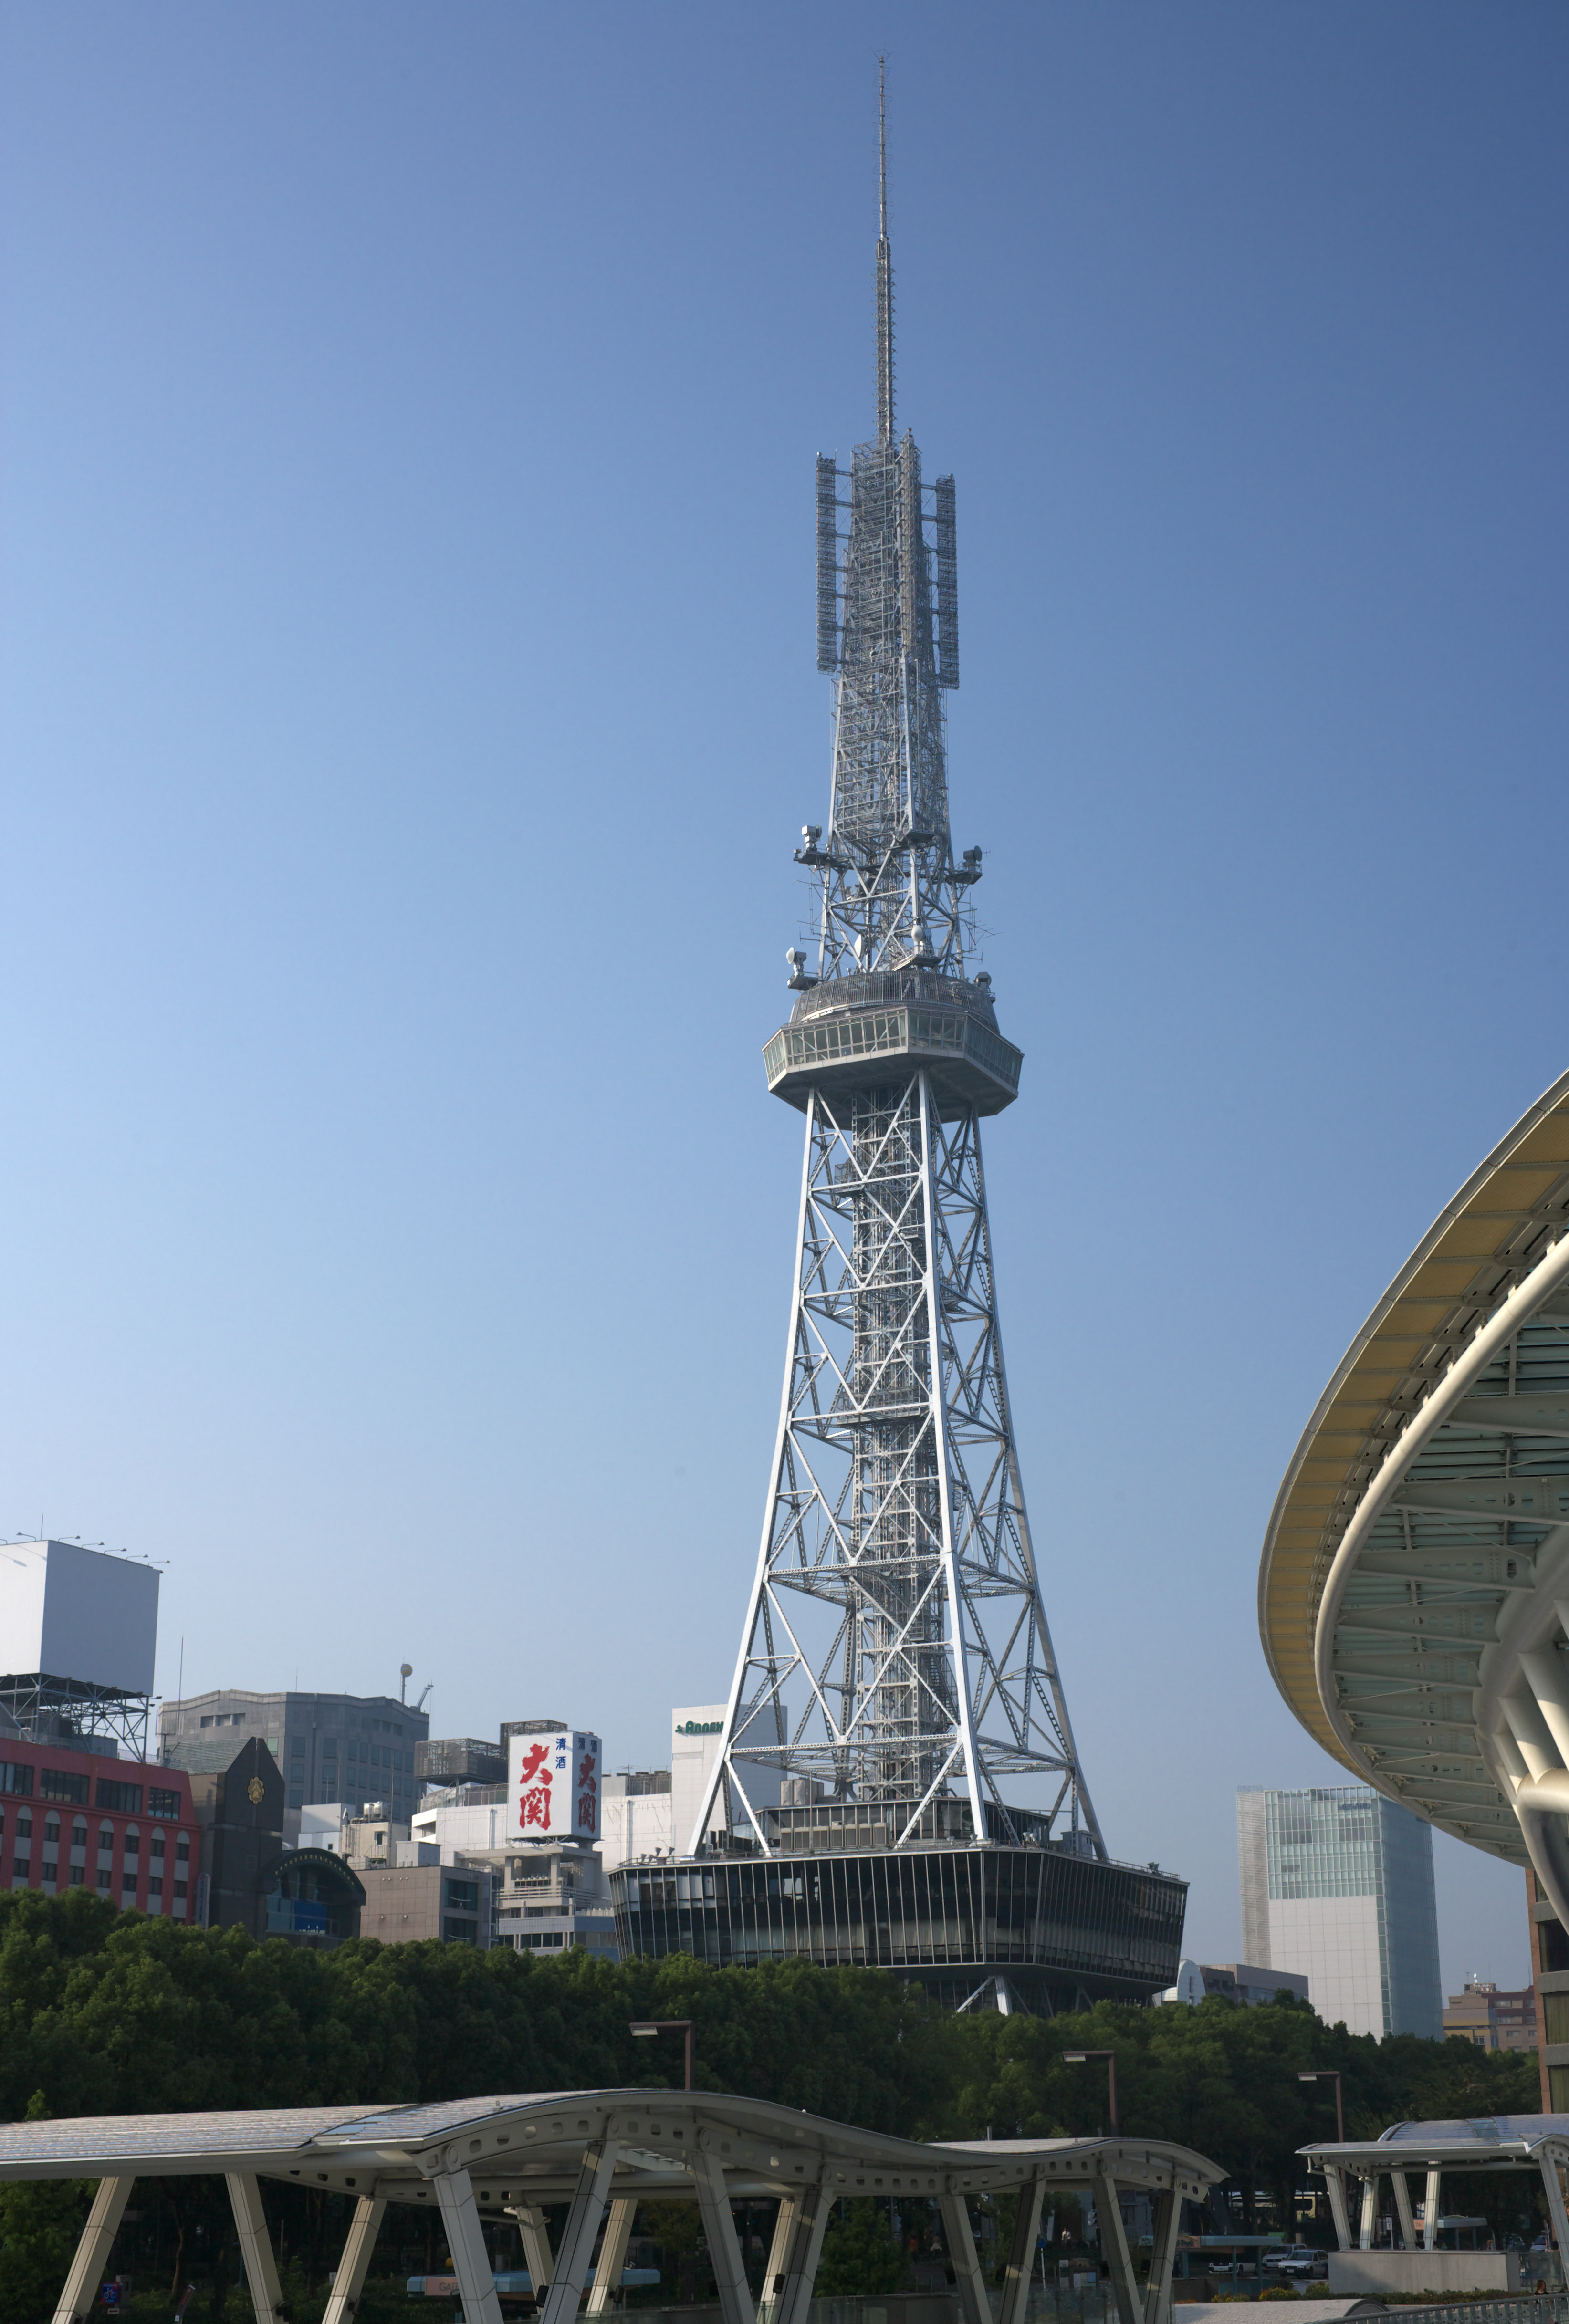 fotografia, material, livra, ajardine, imagine, proveja fotografia,Nagoya televiso torre, torre de televiso, Uma onda eltrica, TELEVISO, Televiso